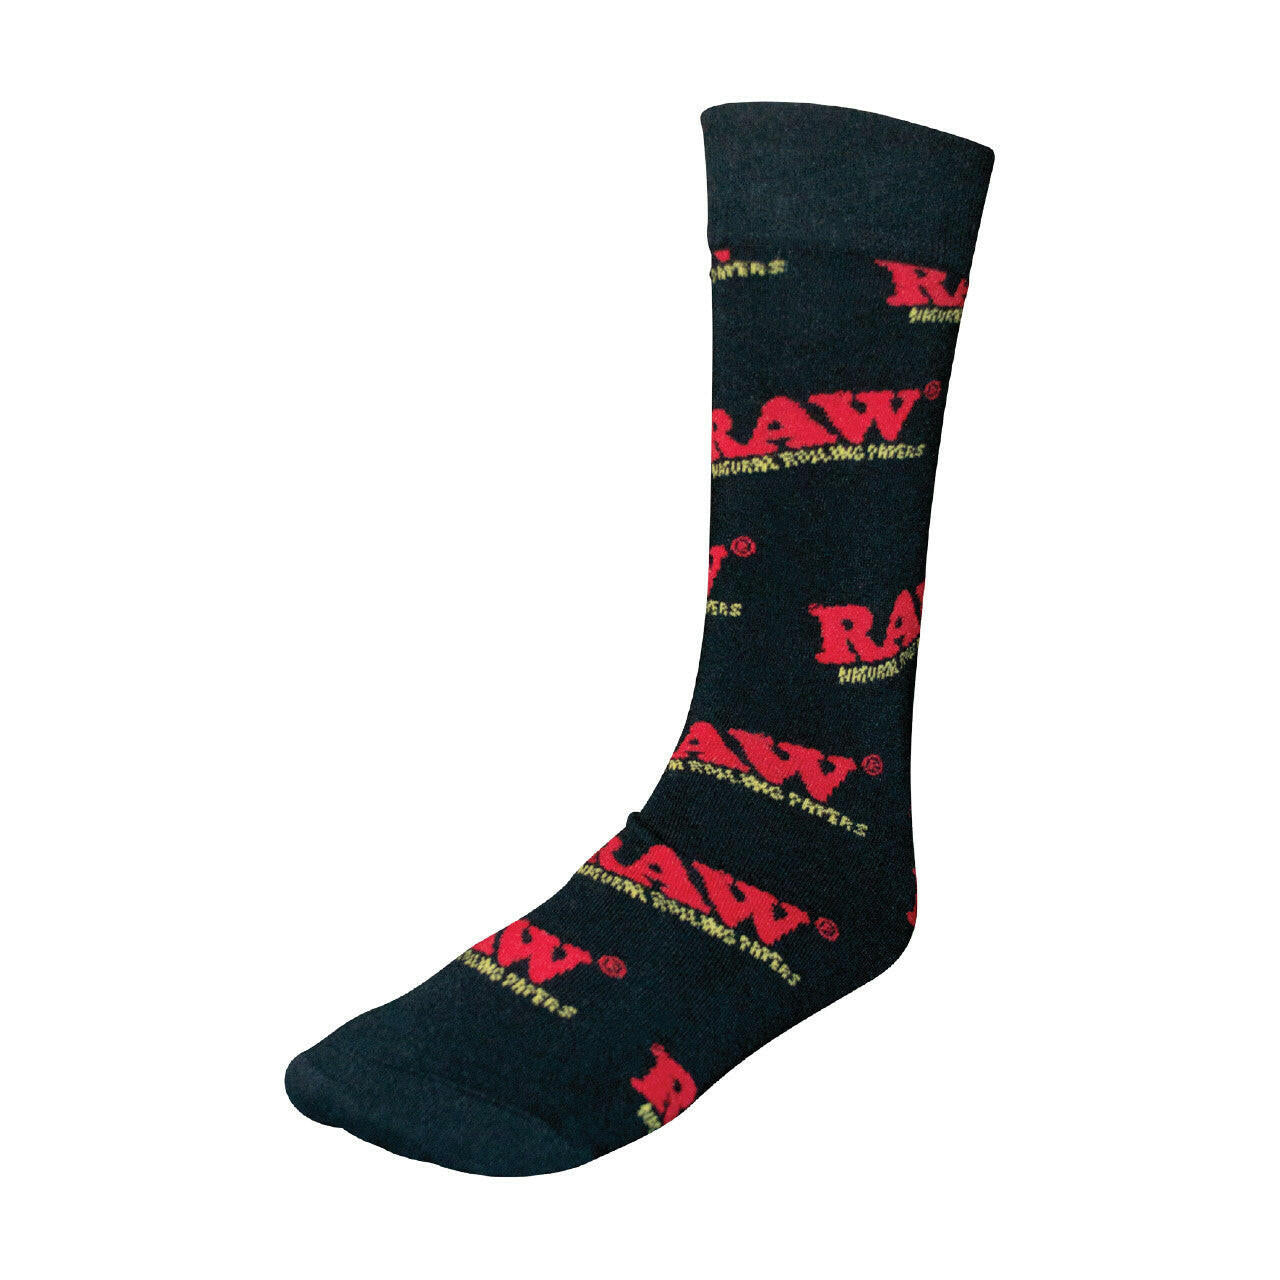 RAW Black Socks - Single Pair